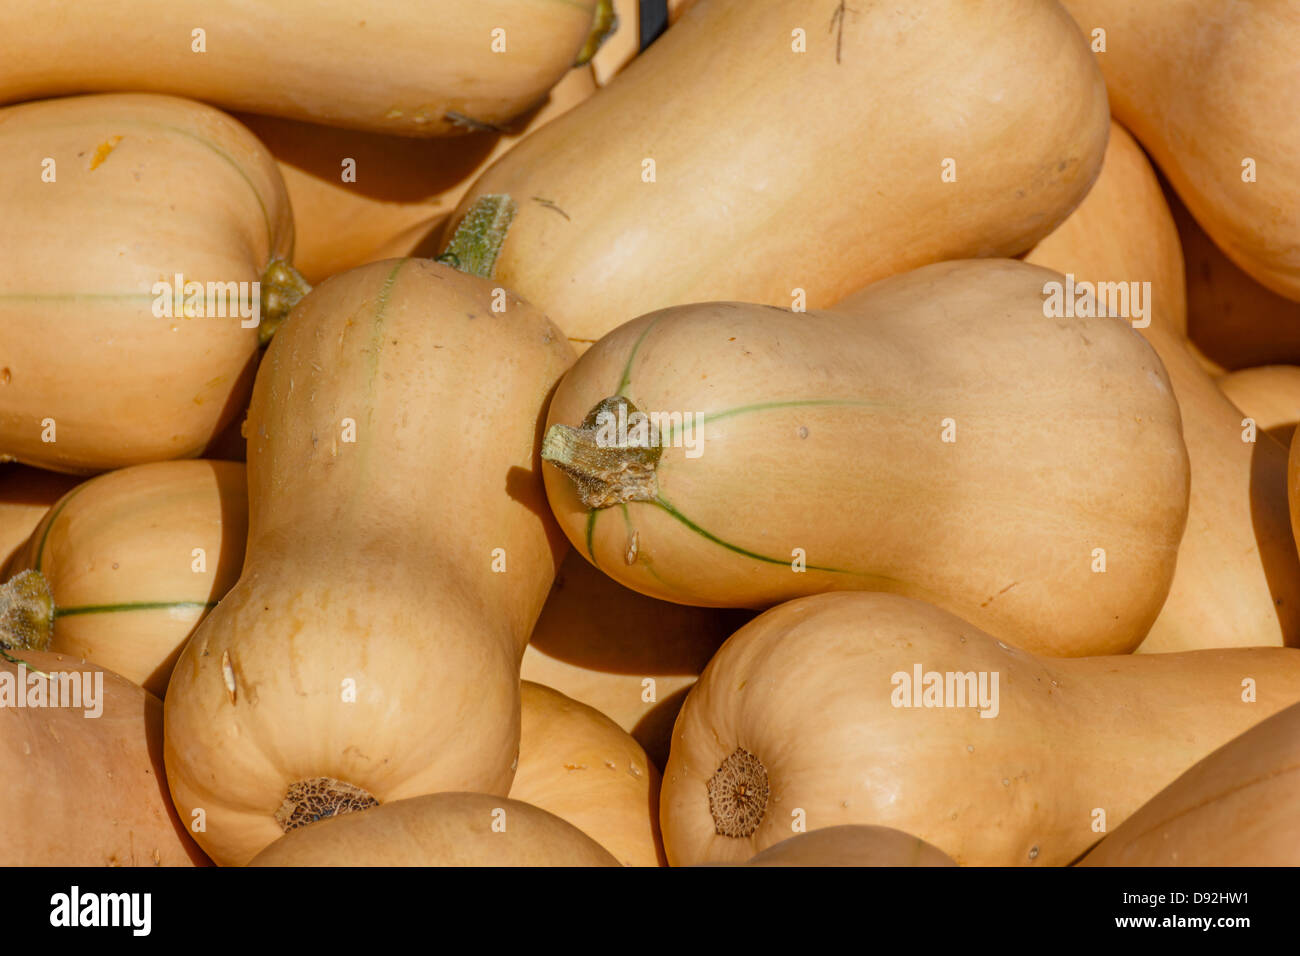 Closeup of a pile of Butternut Squash pumpkins Stock Photo